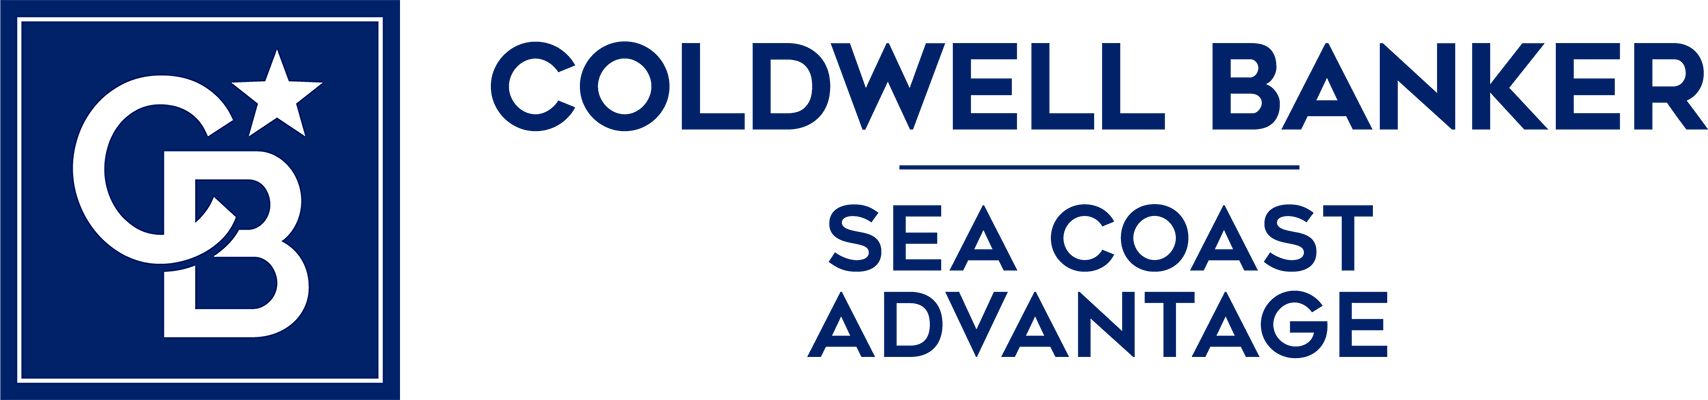 Pam Donohue - Coldwell Banker Sea Coast Advantage Realty Logo